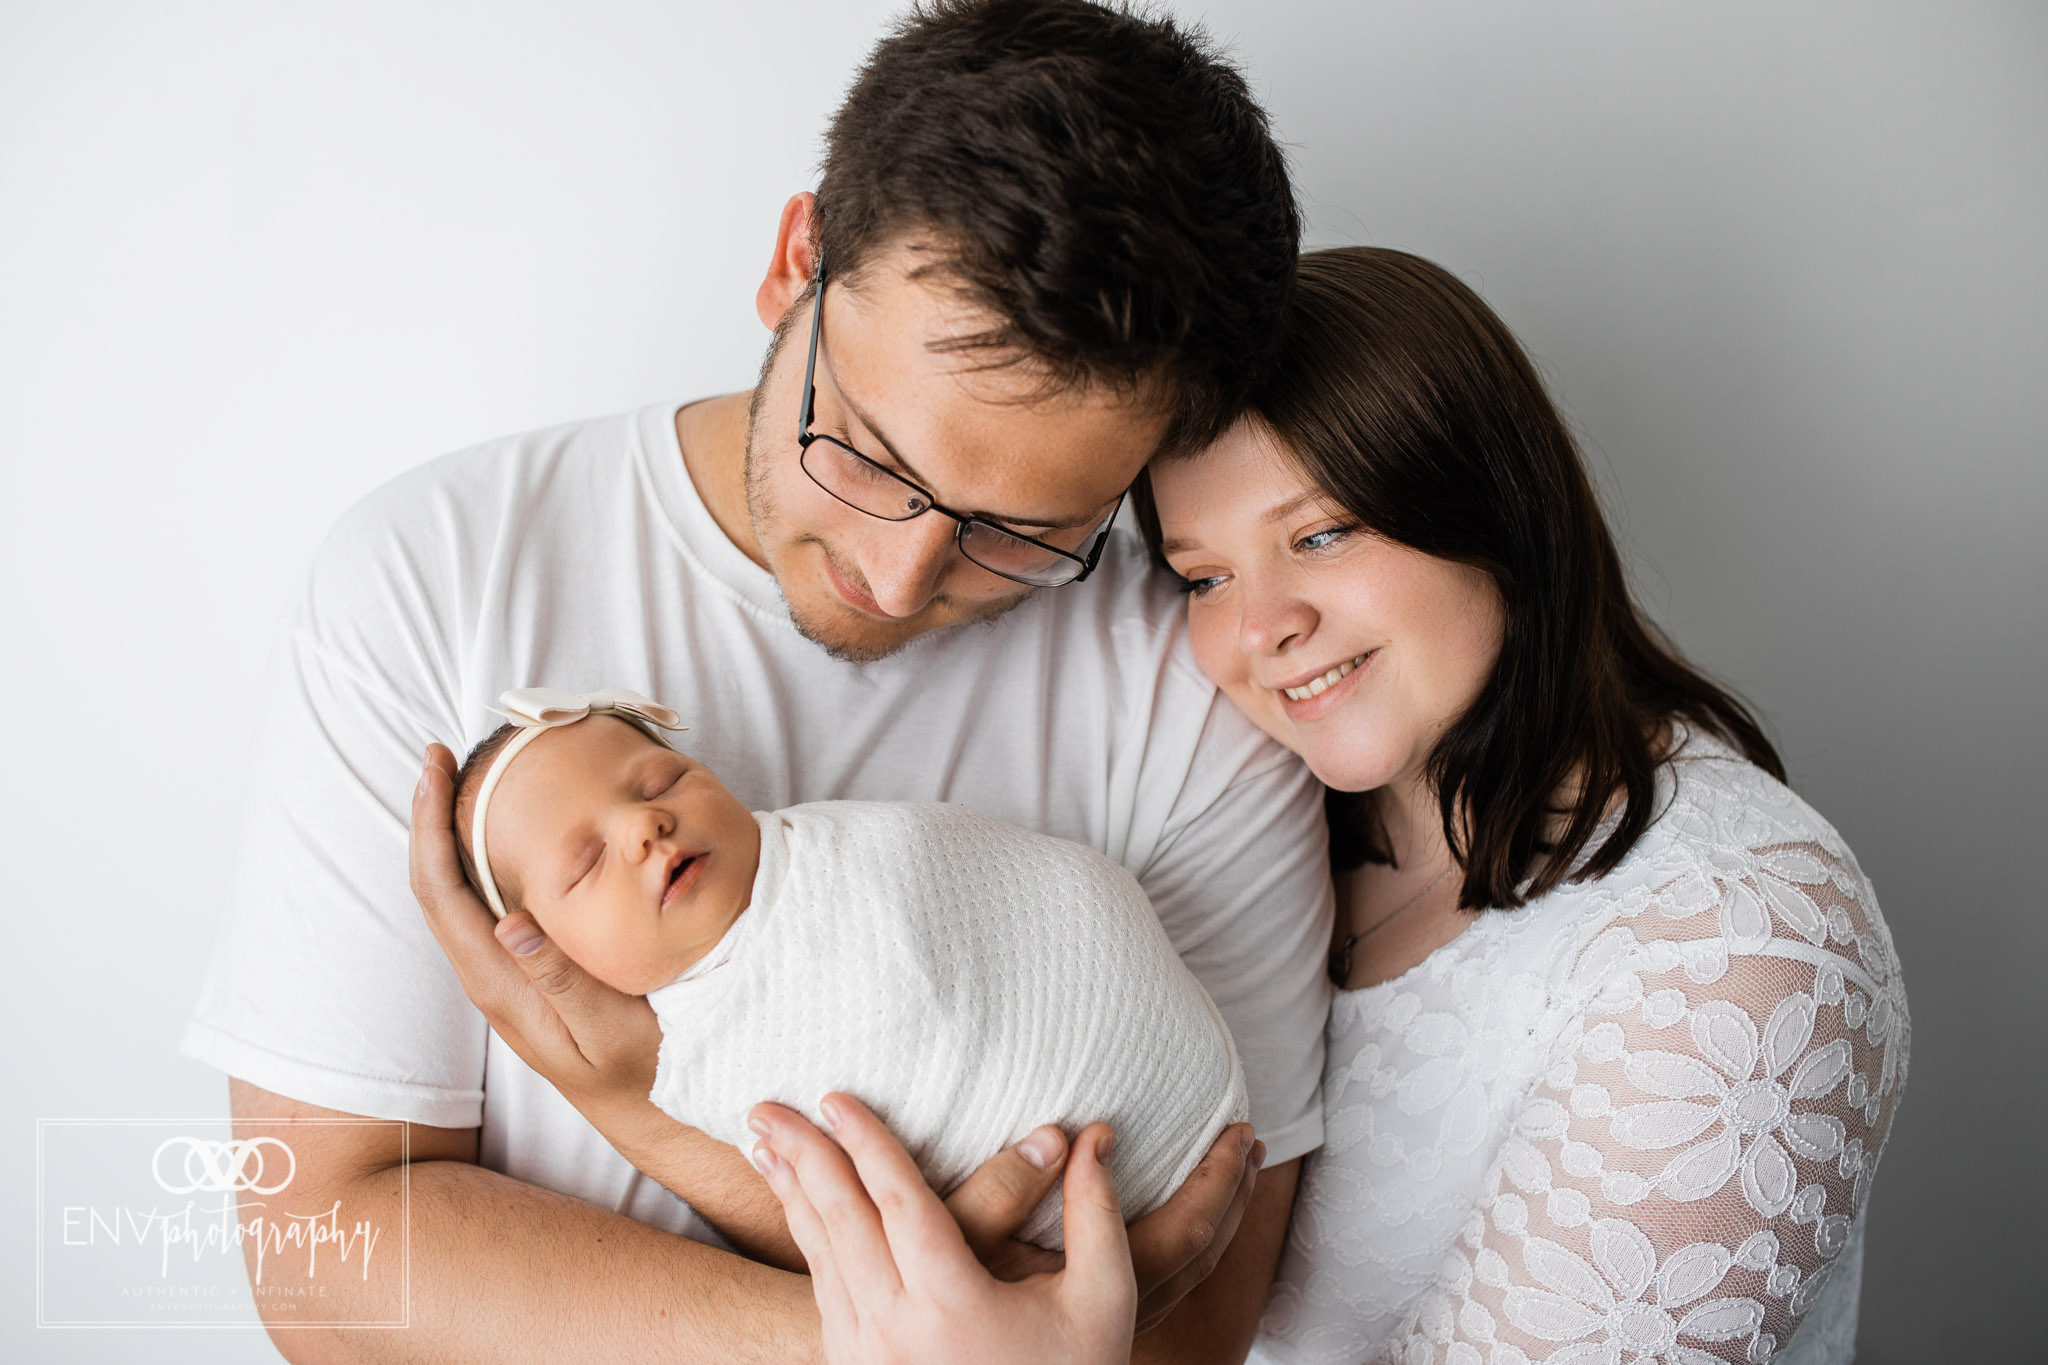 mount vernon columbus ohio newborn maternity photographer (15).jpg